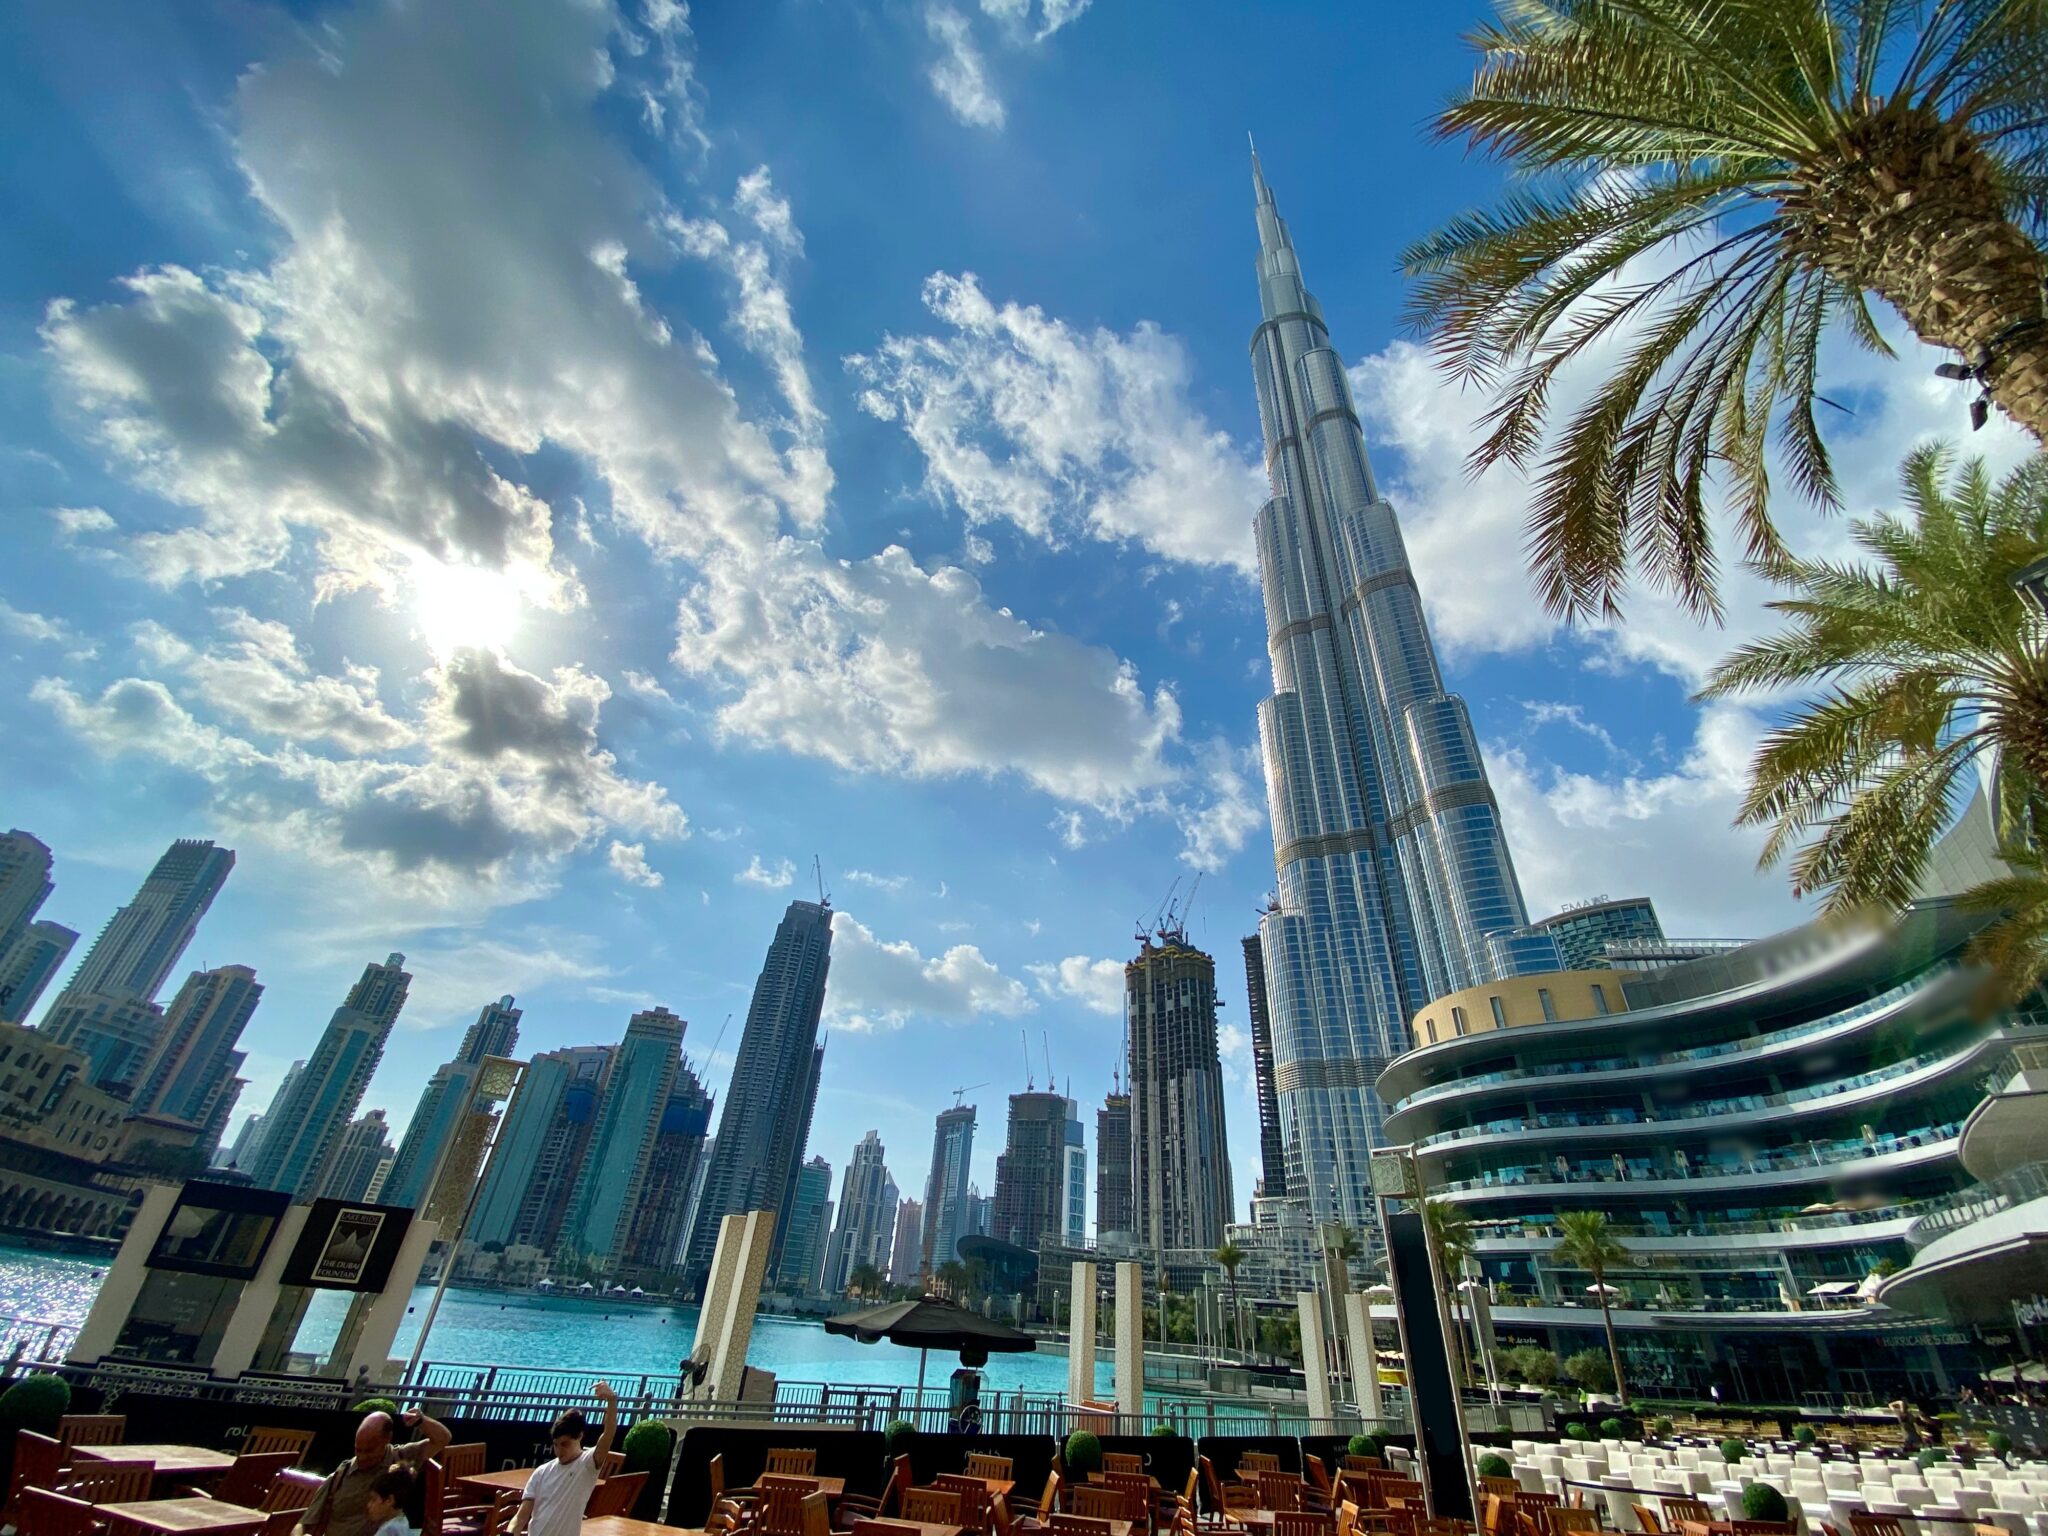 Dubai Mall and the Burj Khalifa. Credit: Unsplash